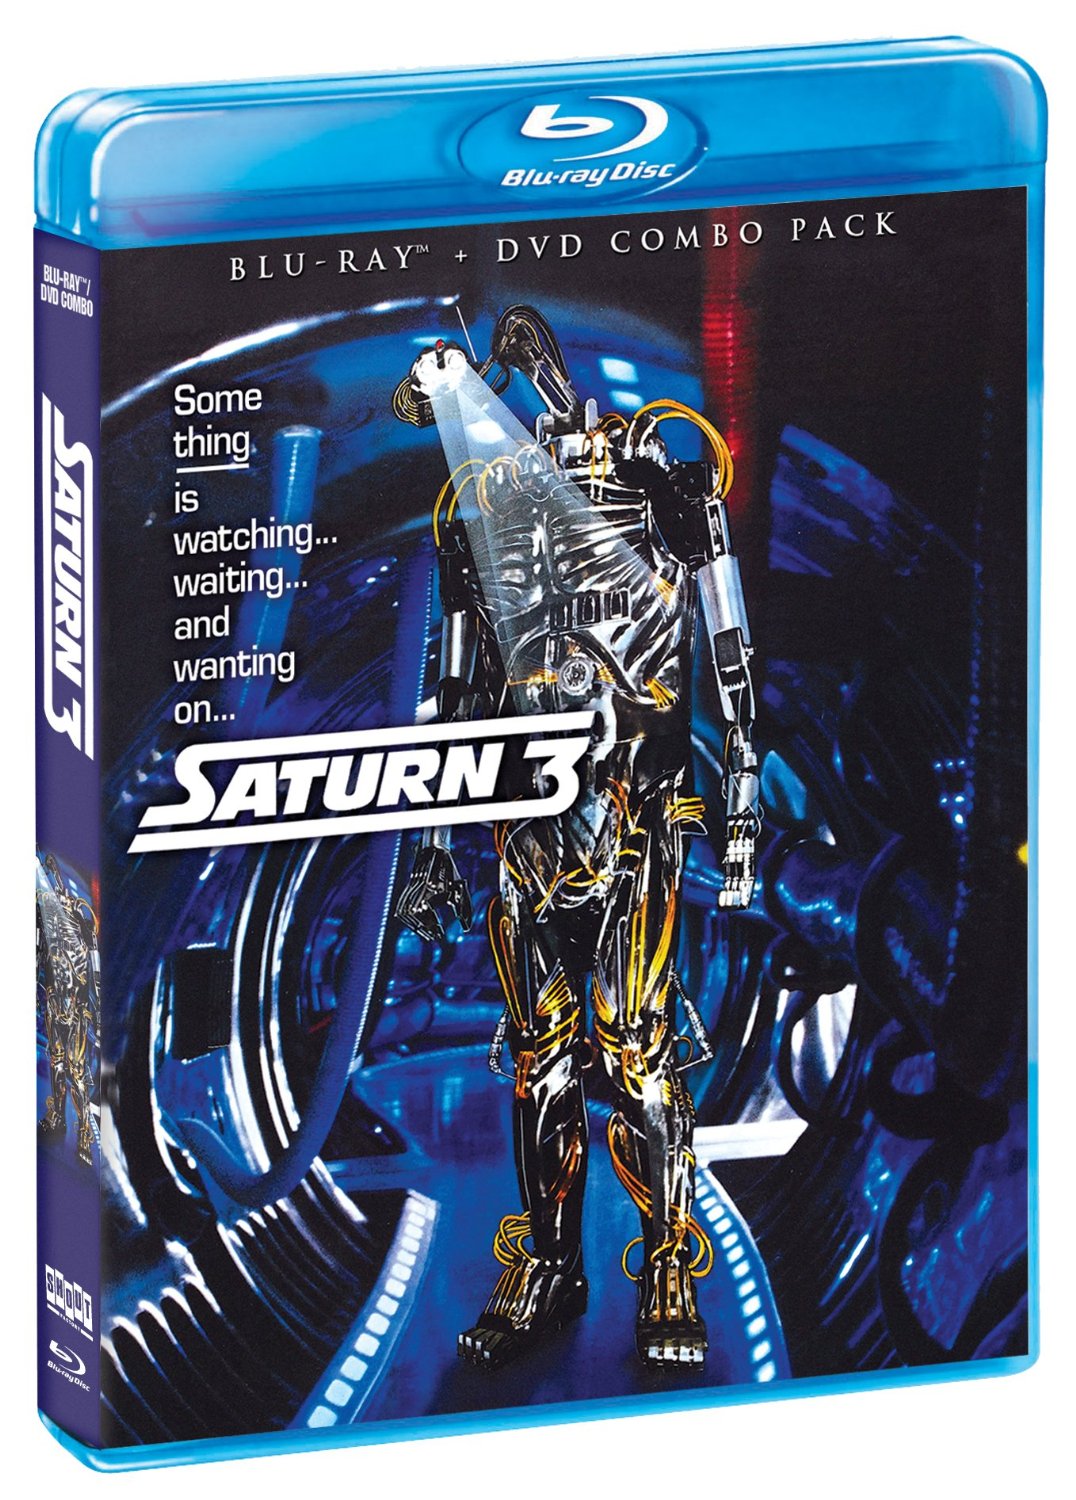 Saturn 3 Blu-ray